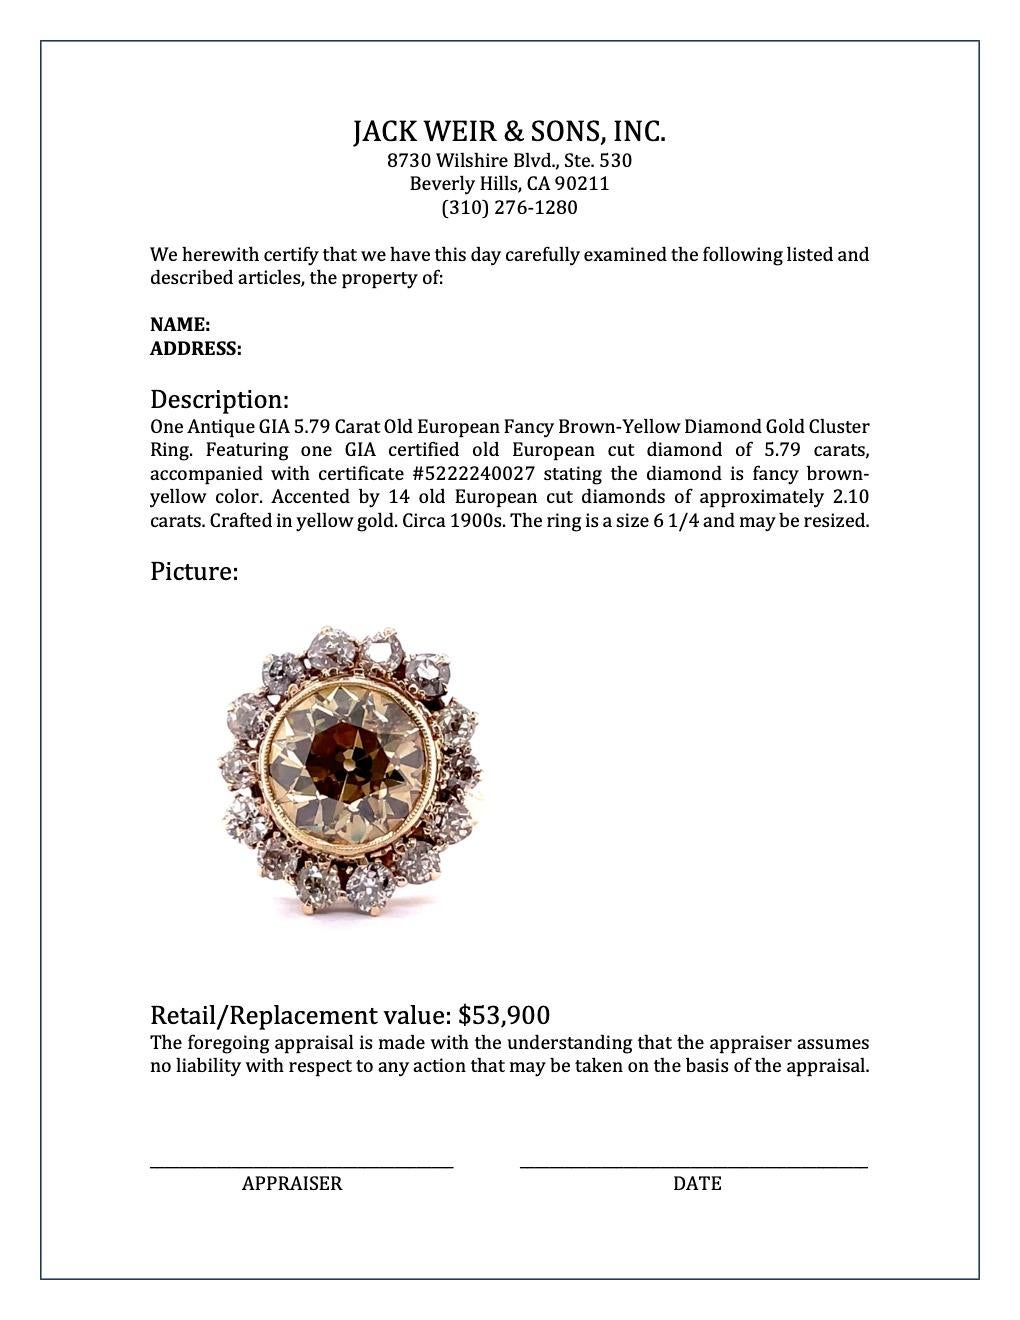 Antique GIA 5.79 Carat Old European Fancy Brown-Yellow Diamond Gold Cluster Ring 2